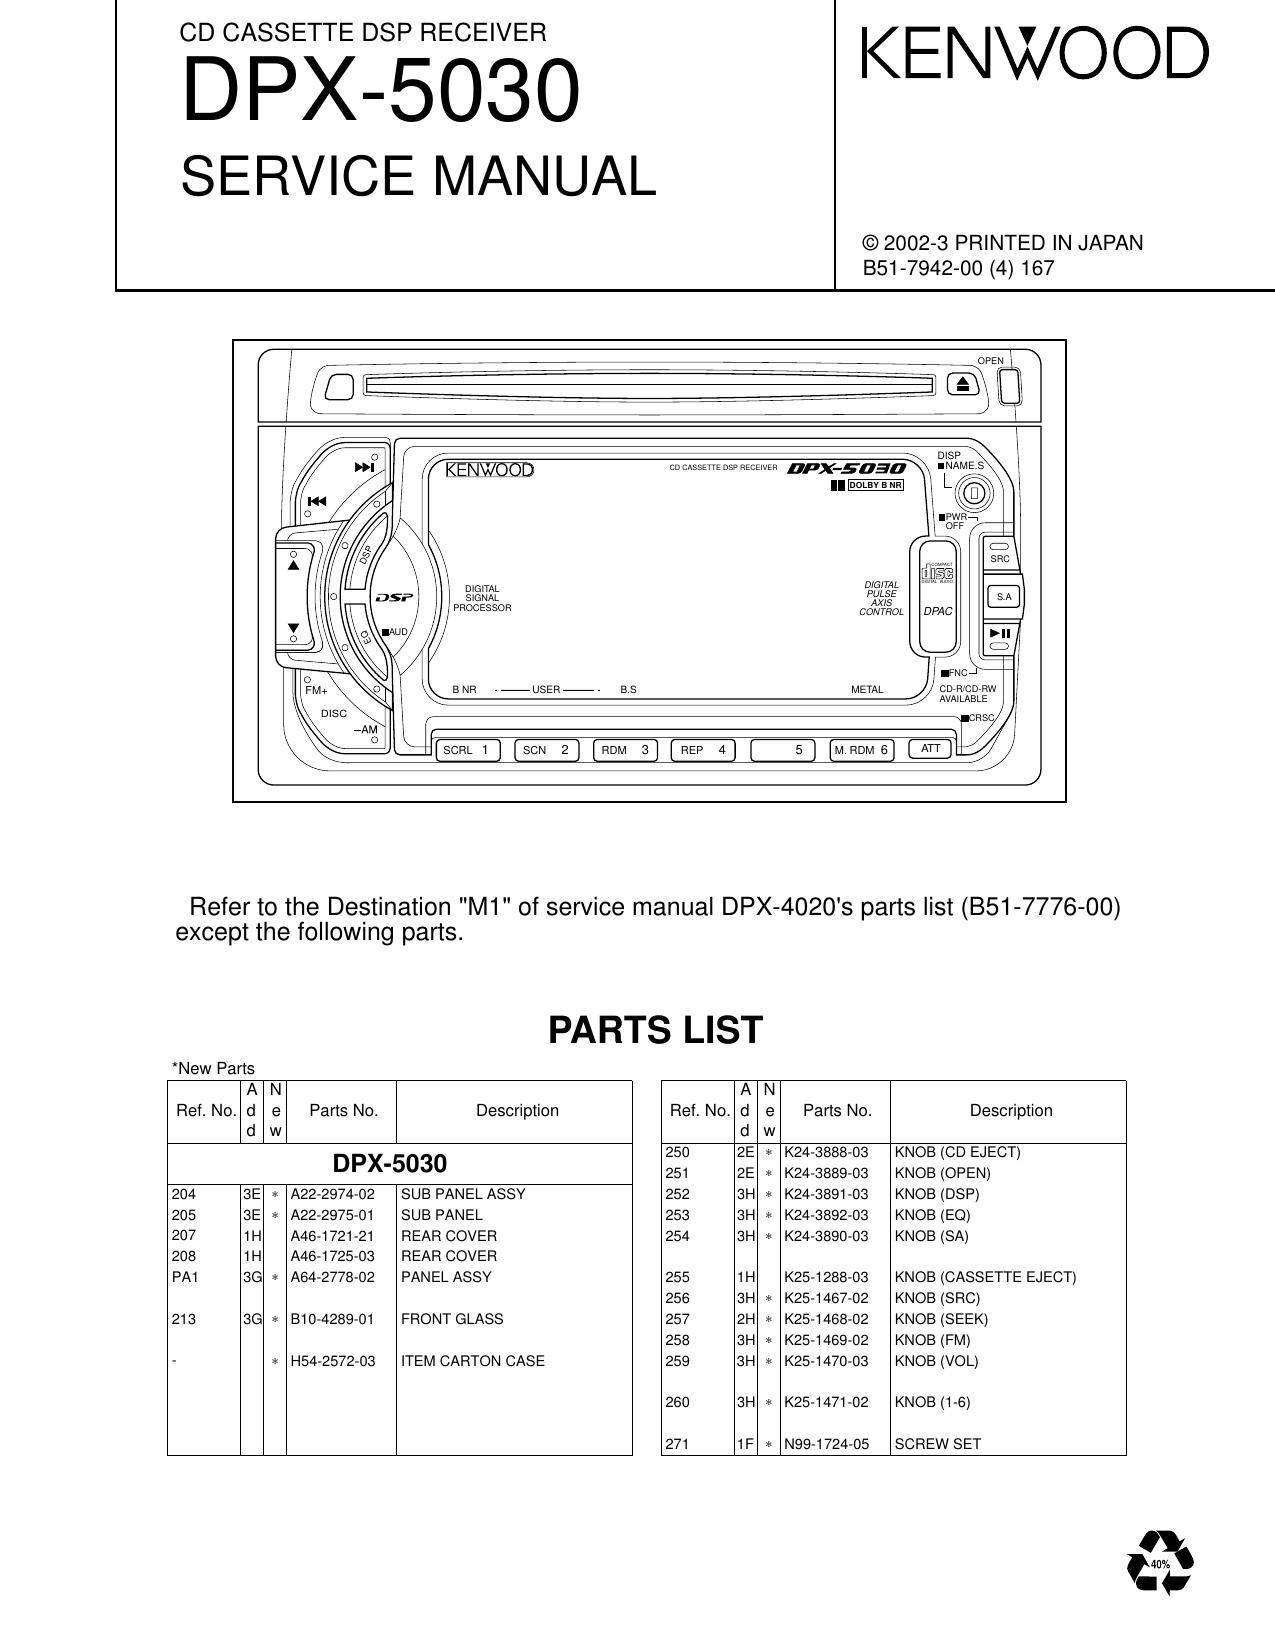 Kenwood DPX 5030 Service Manual